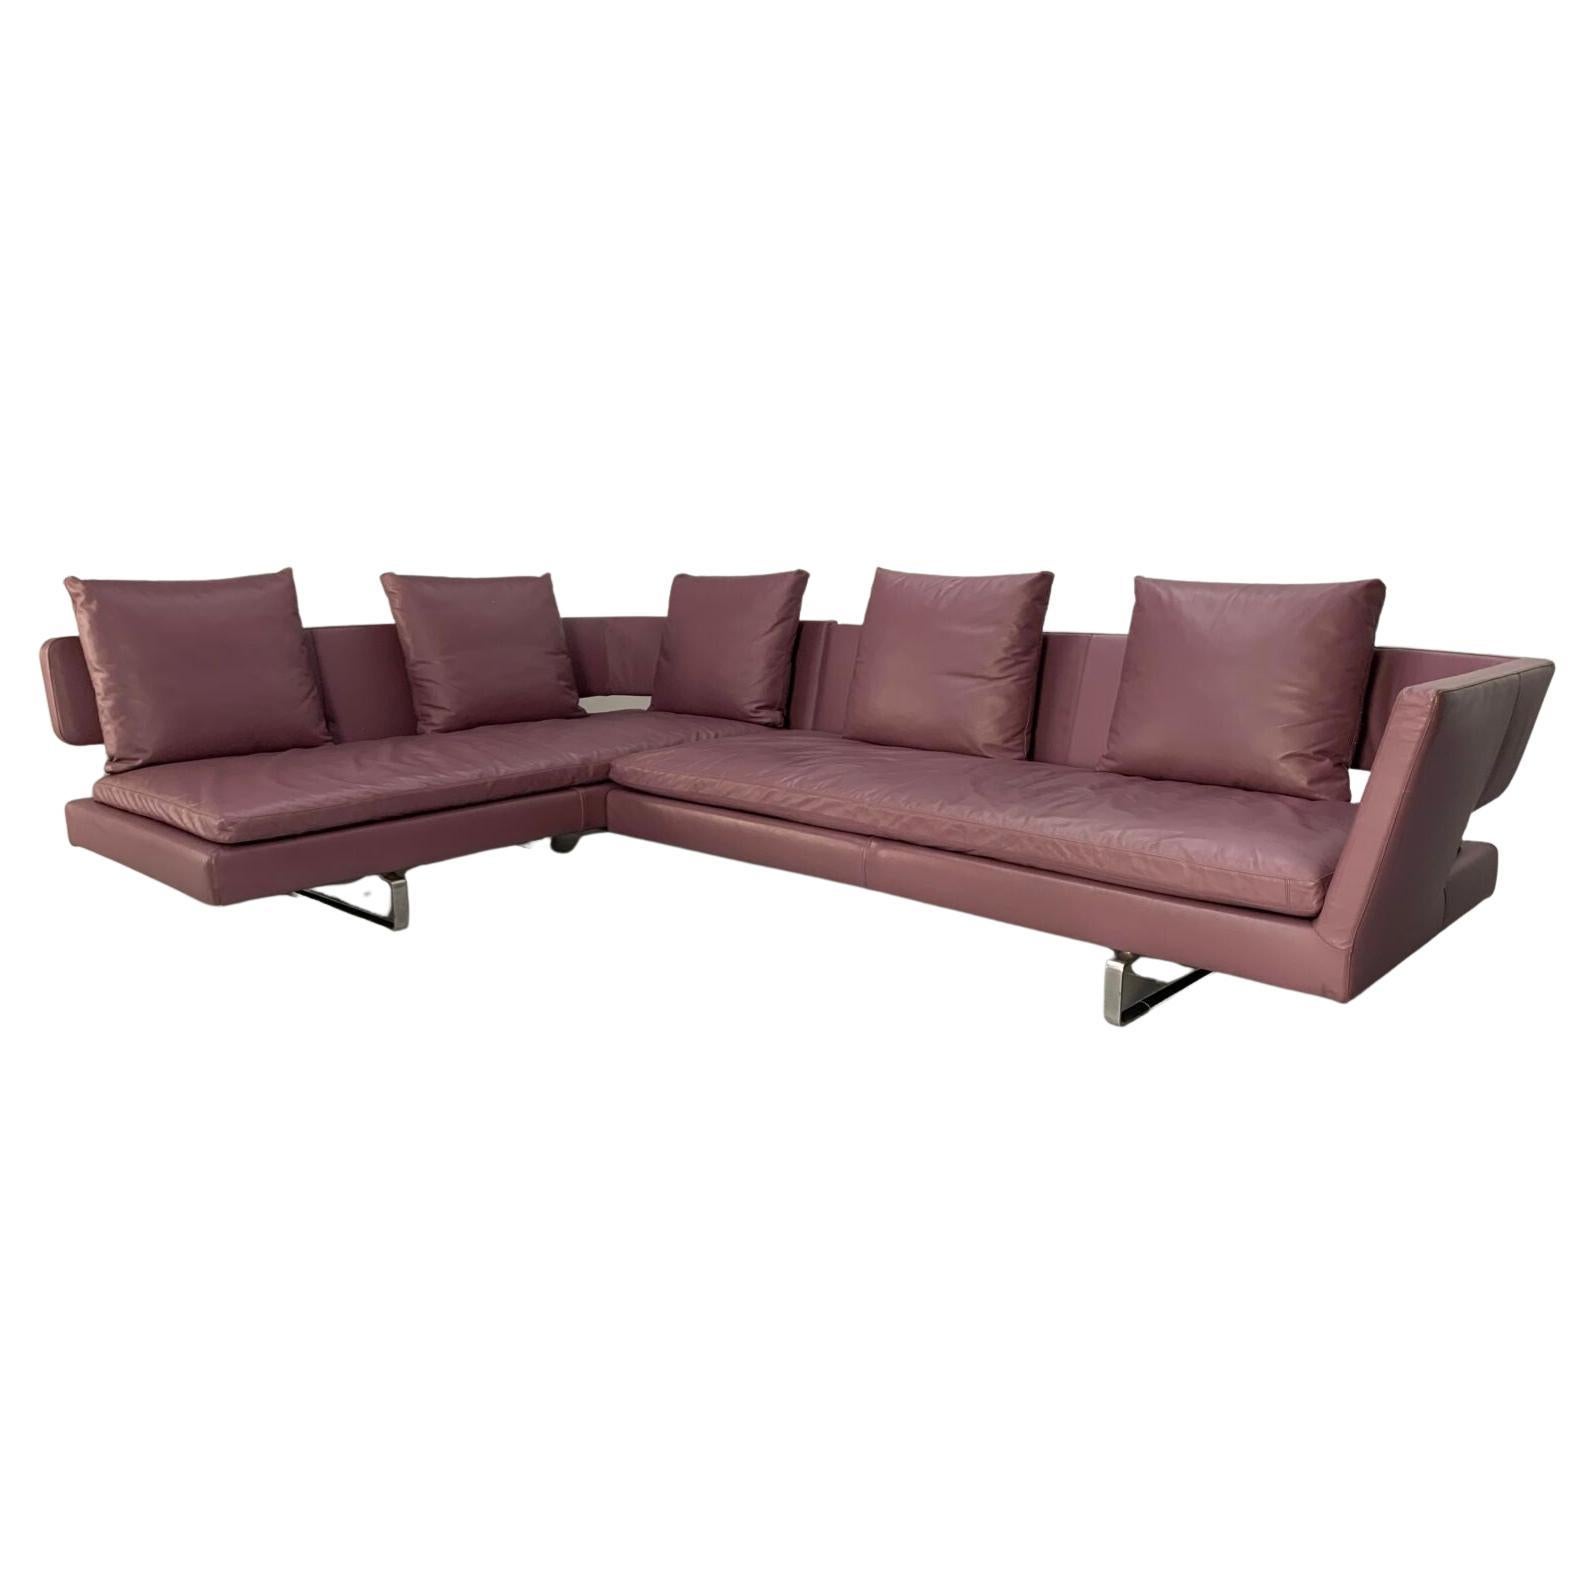 B&B Italia “Arne” 6-Seat L-Shape Sofa – In Mauve Pale-Purple “Gamma” Leather For Sale